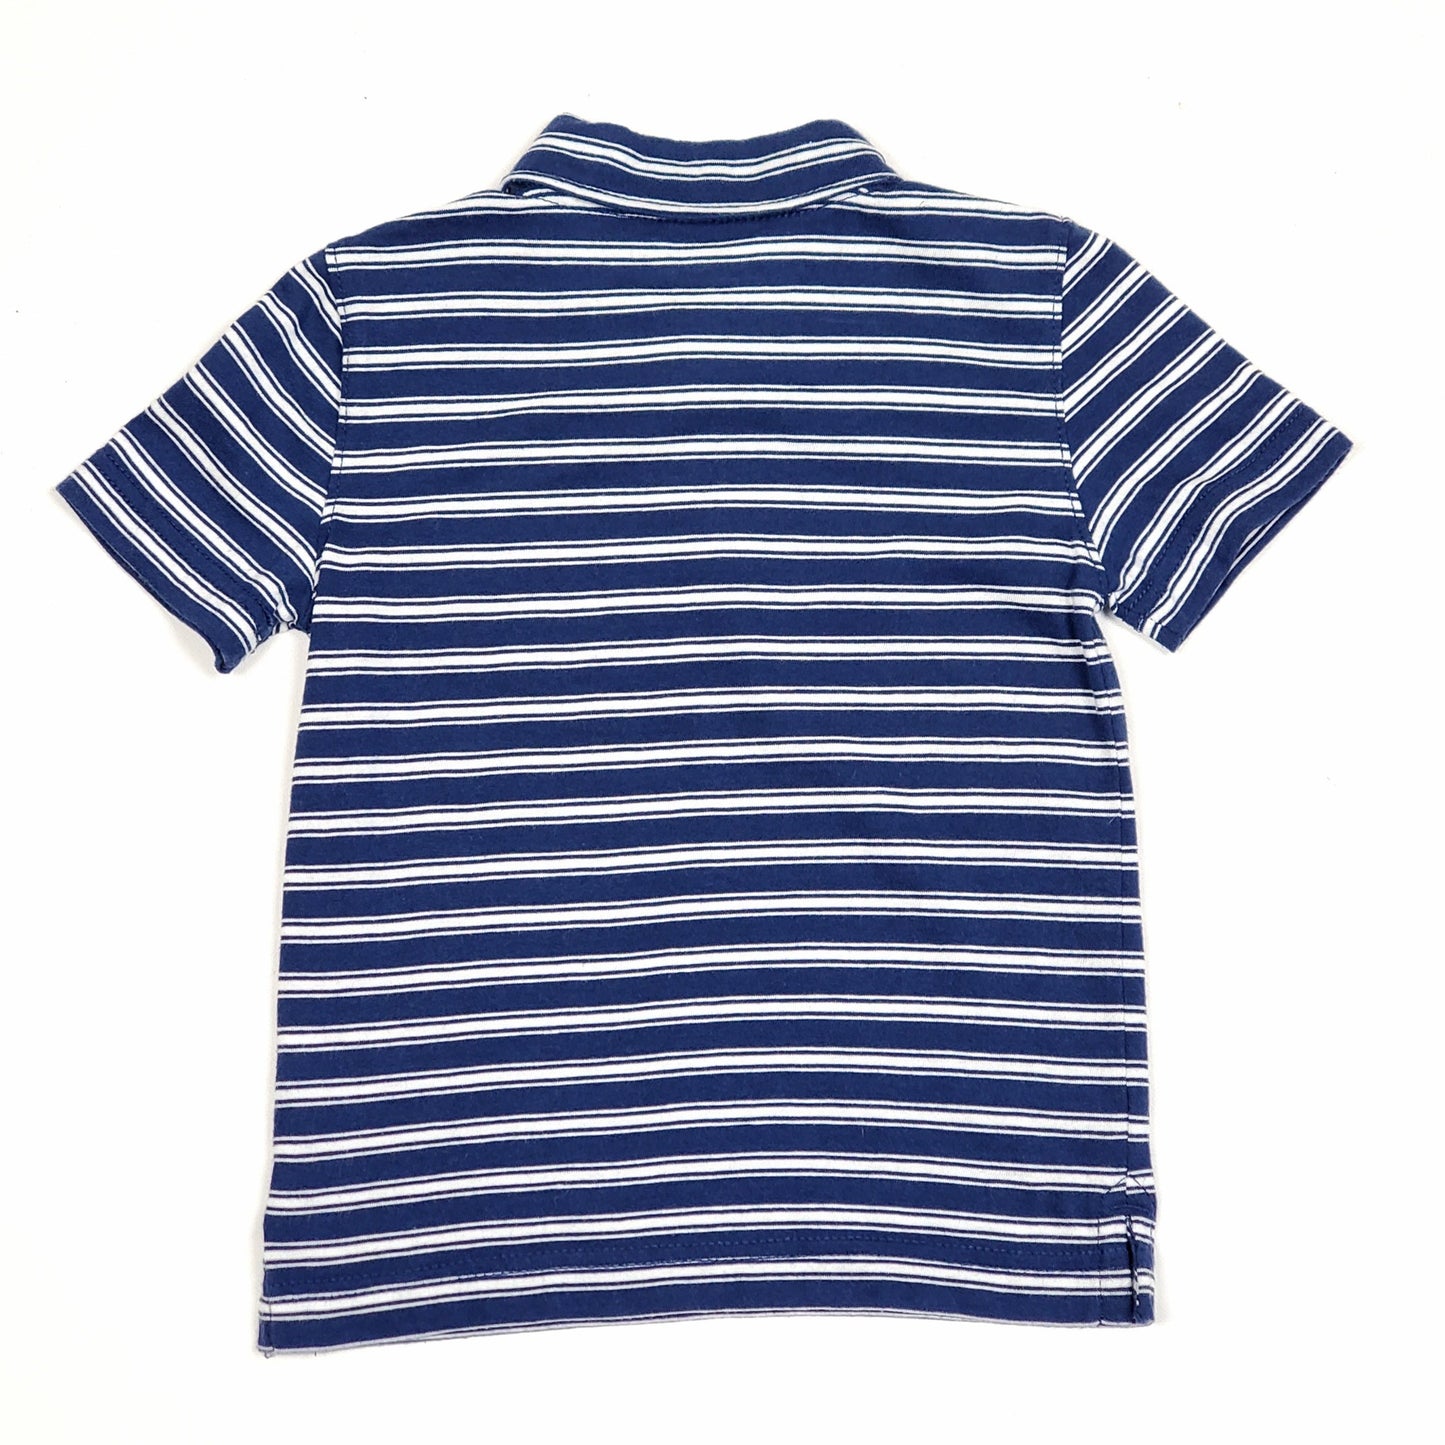 Baby Gap Boys Navy Blue Striped Polo Shirt 2T Used, back